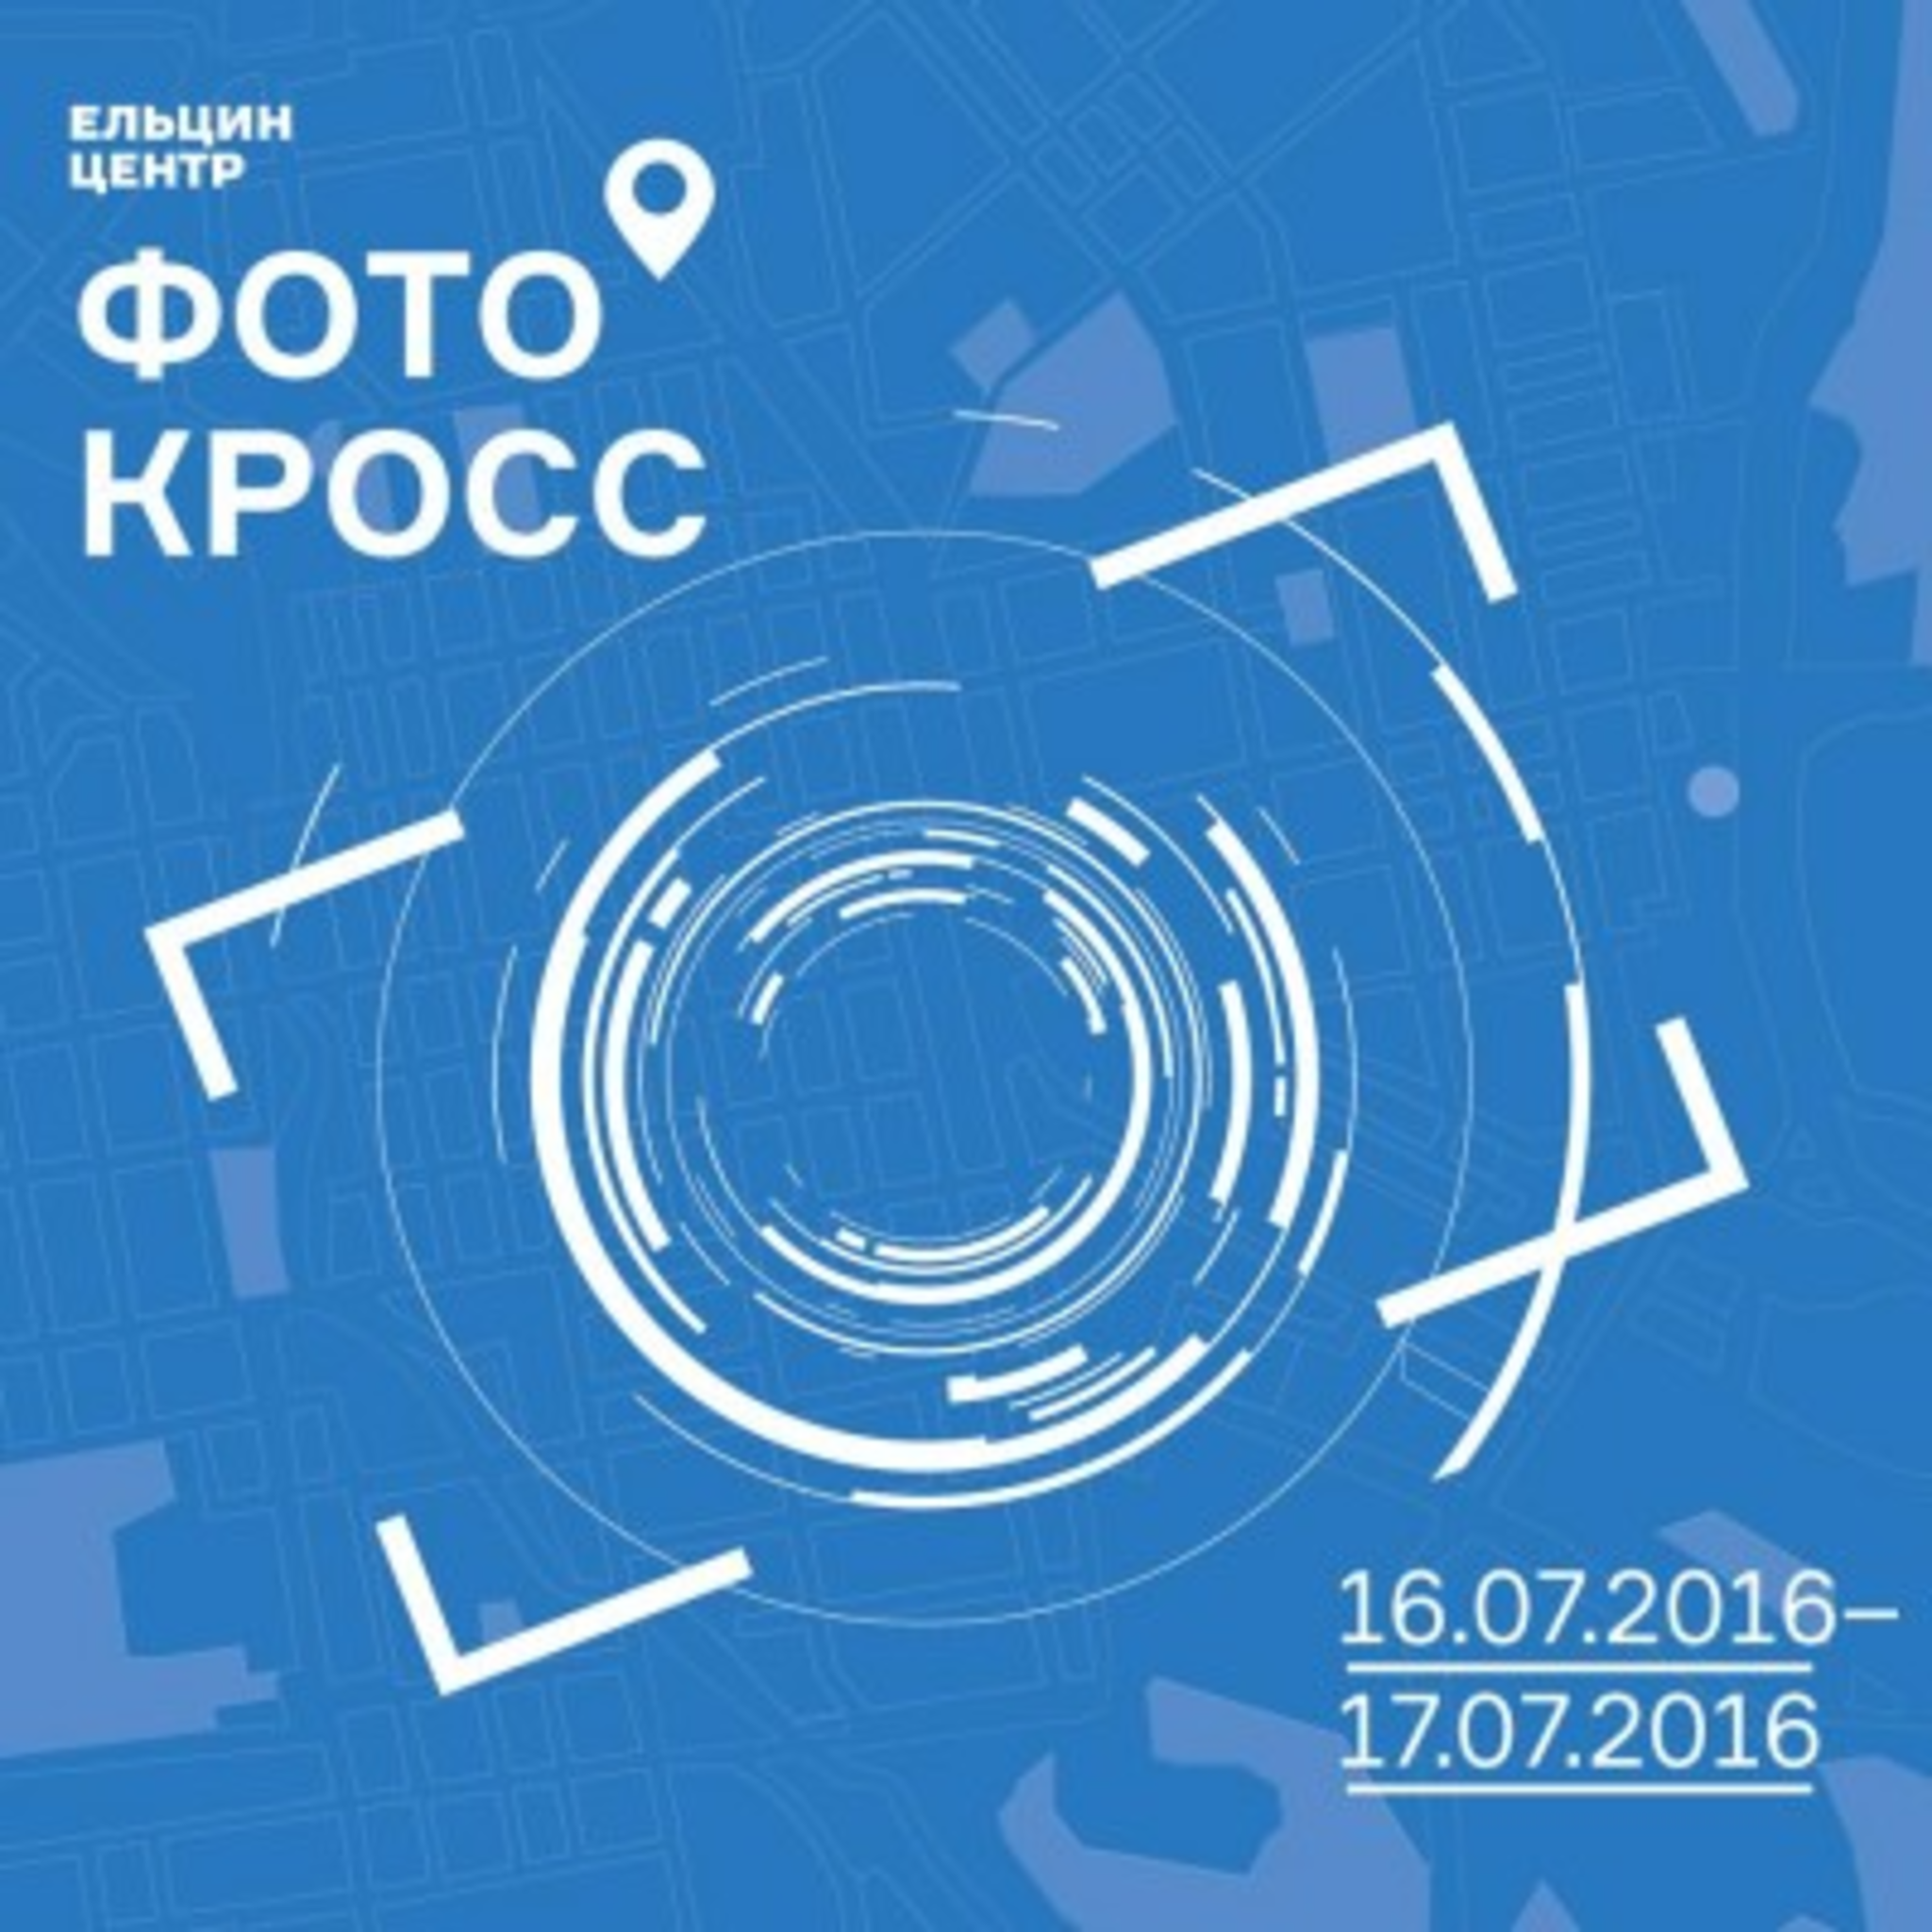 Photocross dedicated to Novokuznetskaya photos School exhibition